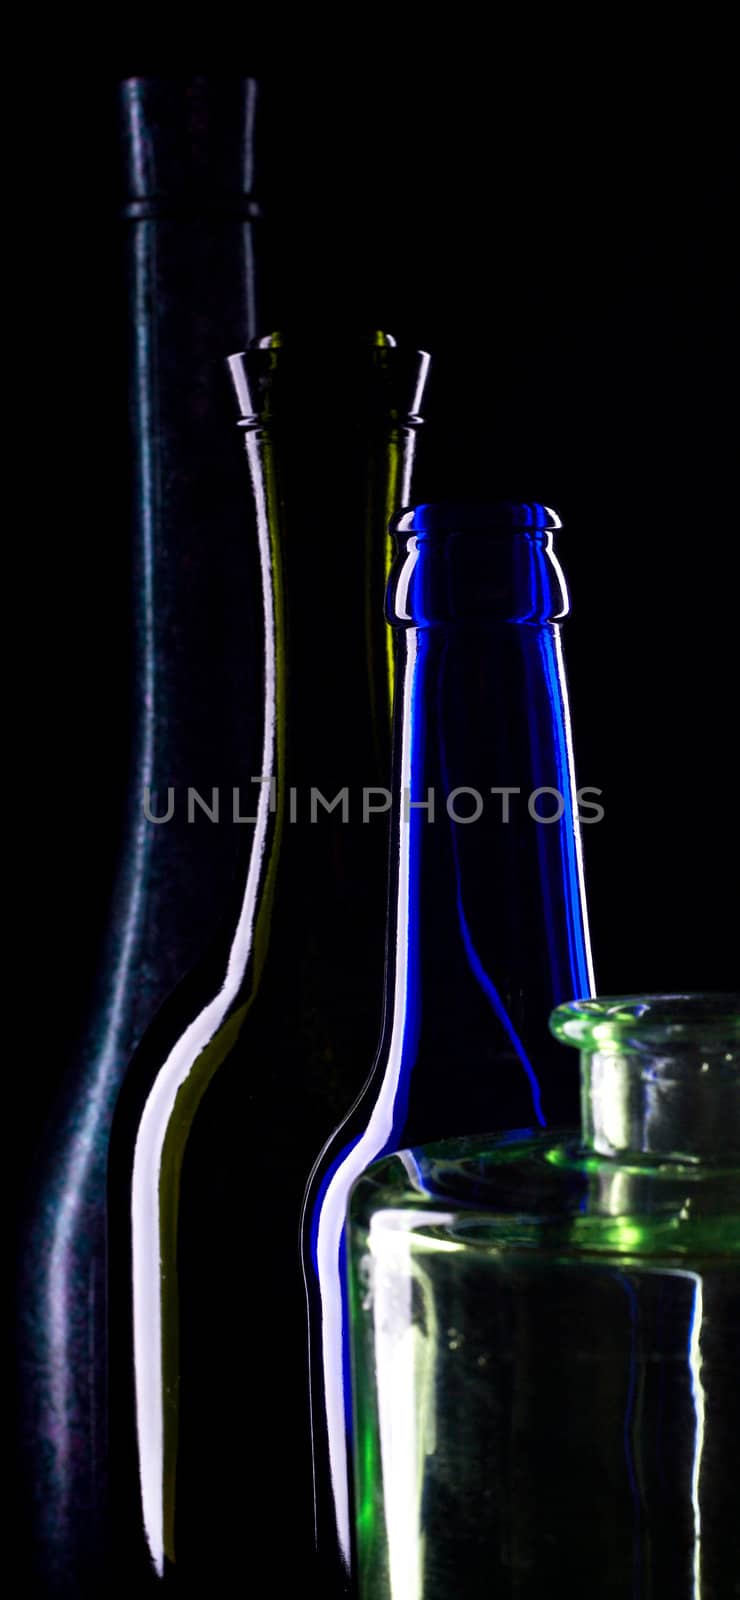 Silhouettes of bottles of wine by velkol